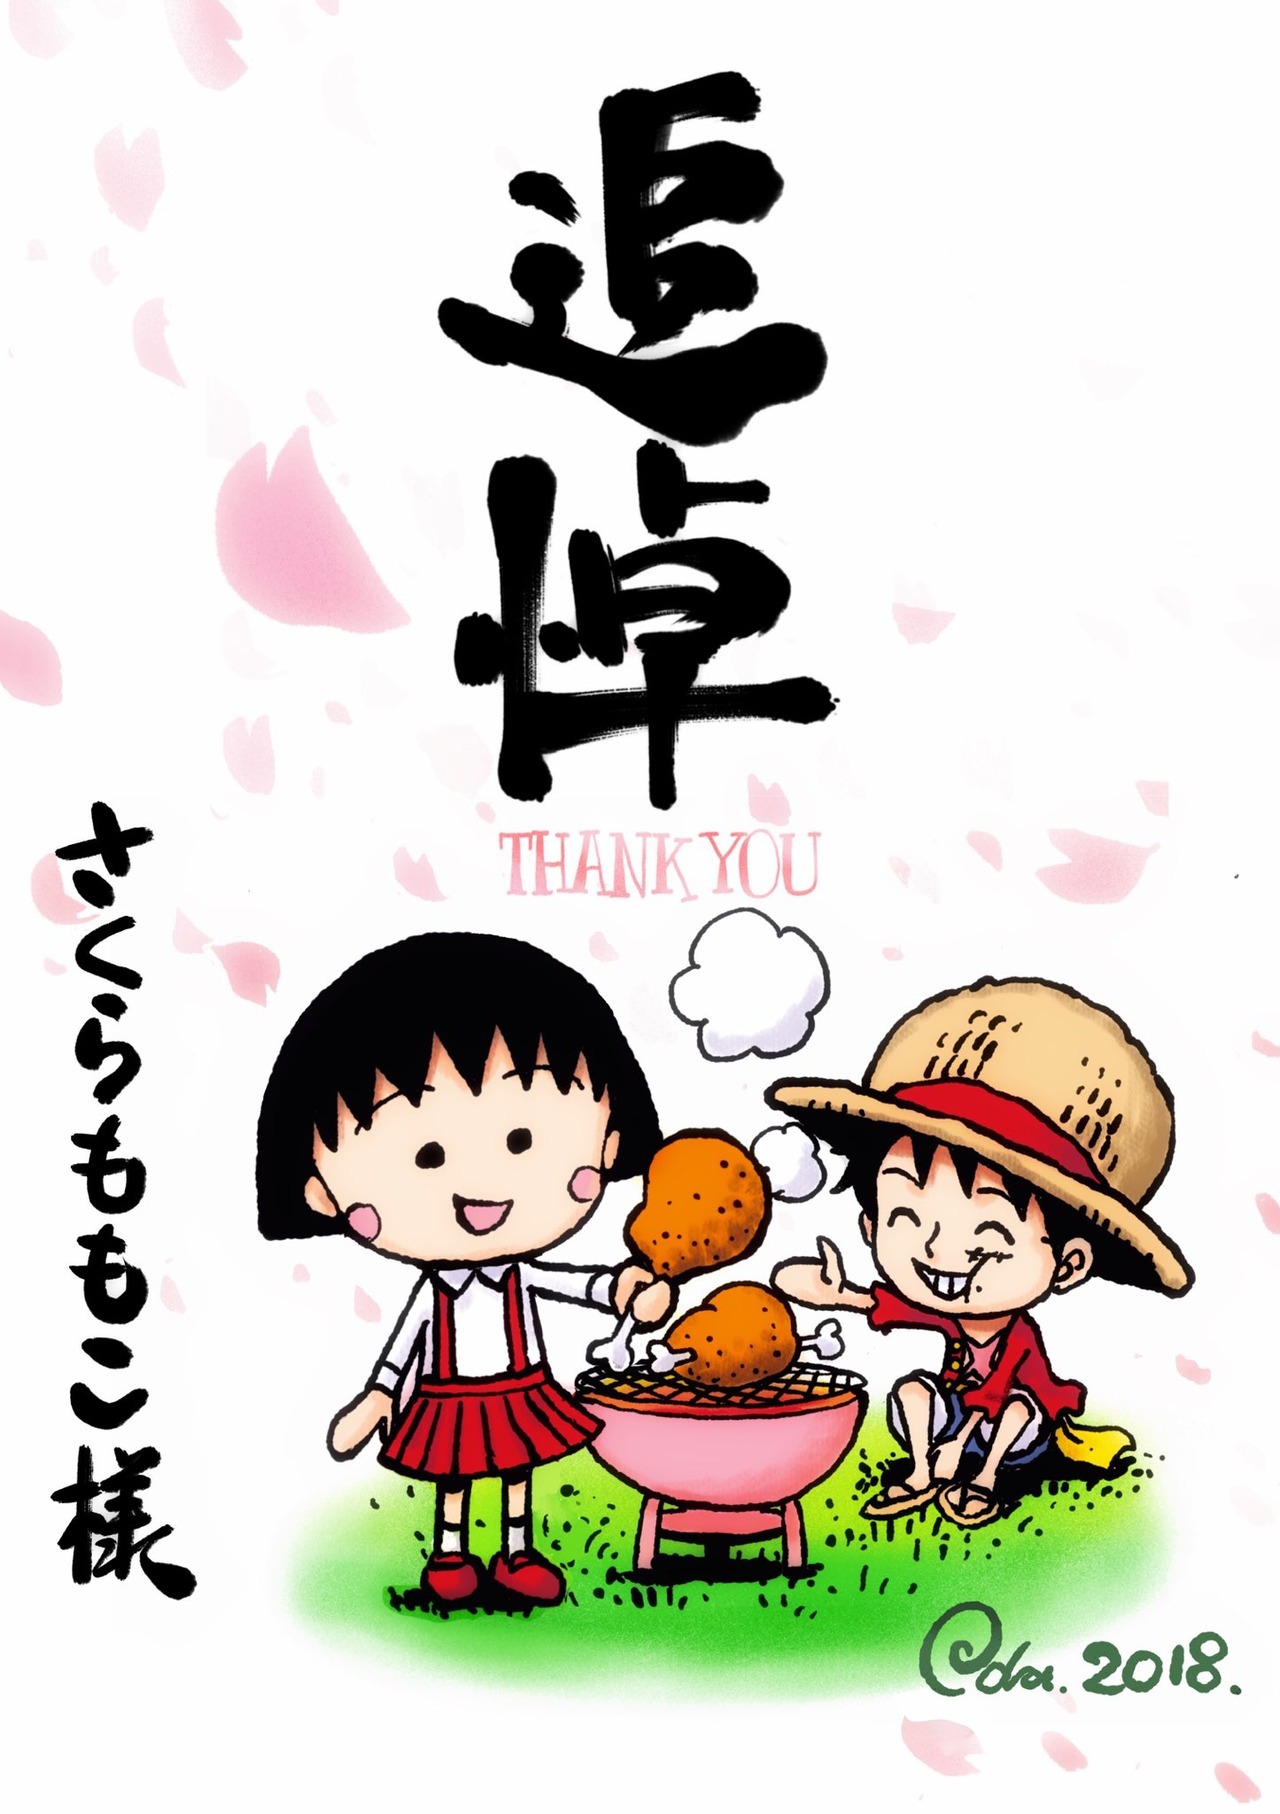 Eiichiro Oda tribute illustration for Momoko Sakura; who passed away earlier this month.